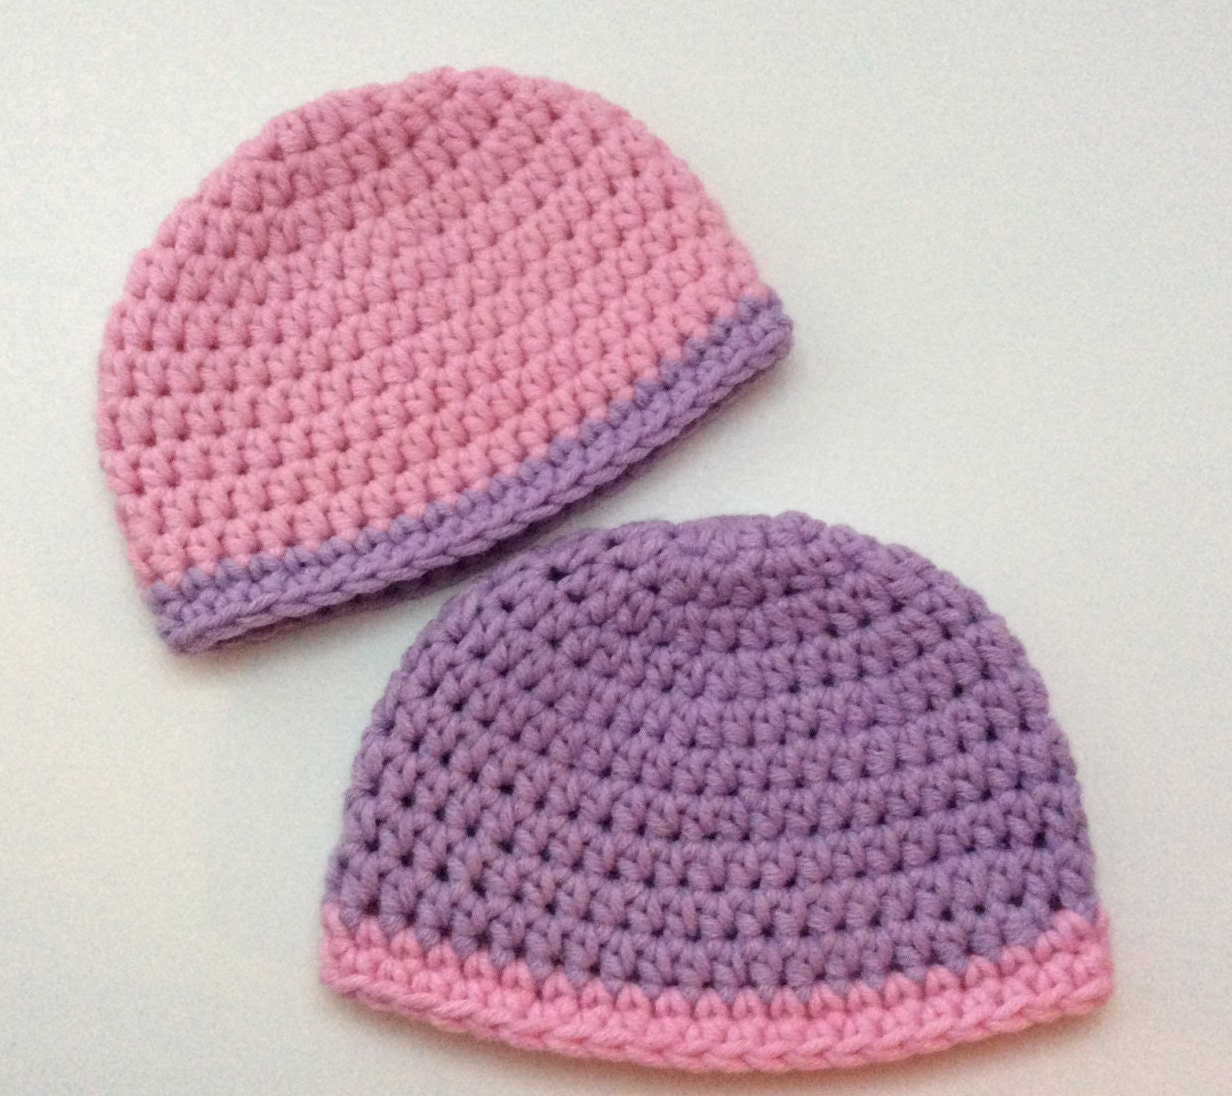 Crochet Preemie Hats Twins Warm NICU Caps by Crochet2Cherish4You